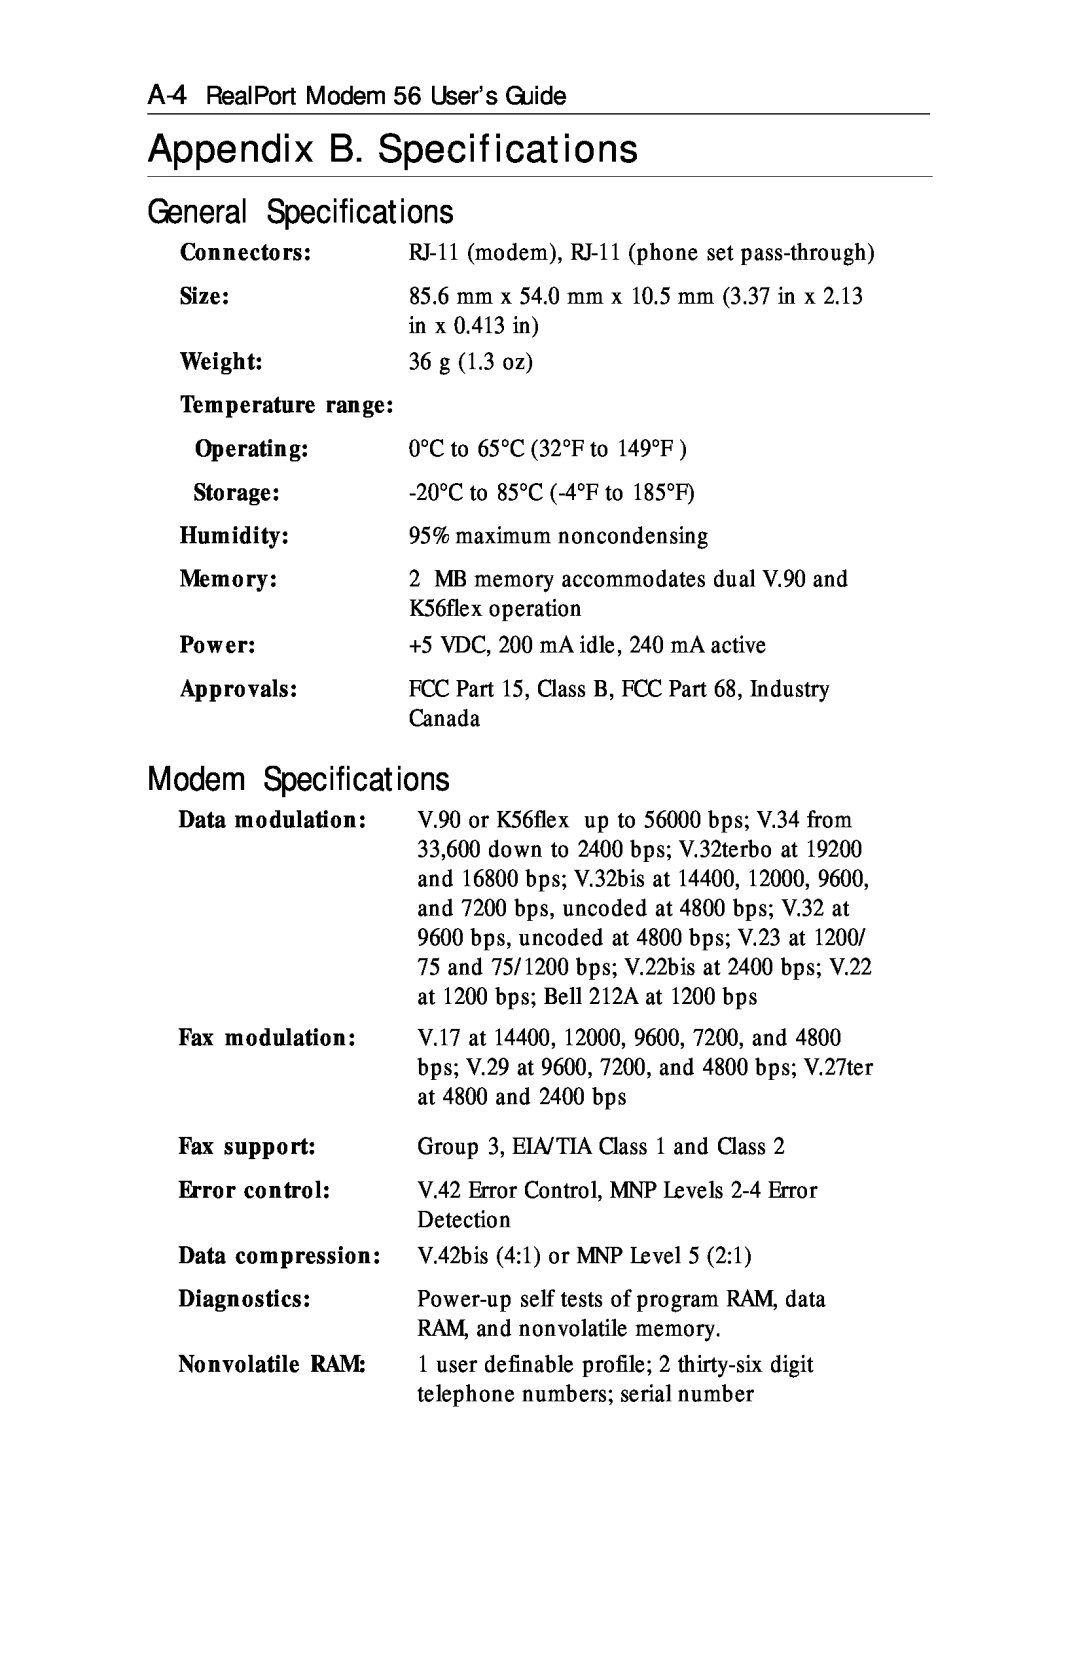 Xircom RM56V1 Appendix B. Specifications, General Specifications, Modem Specifications, Connectors, Size, Weight, Storage 